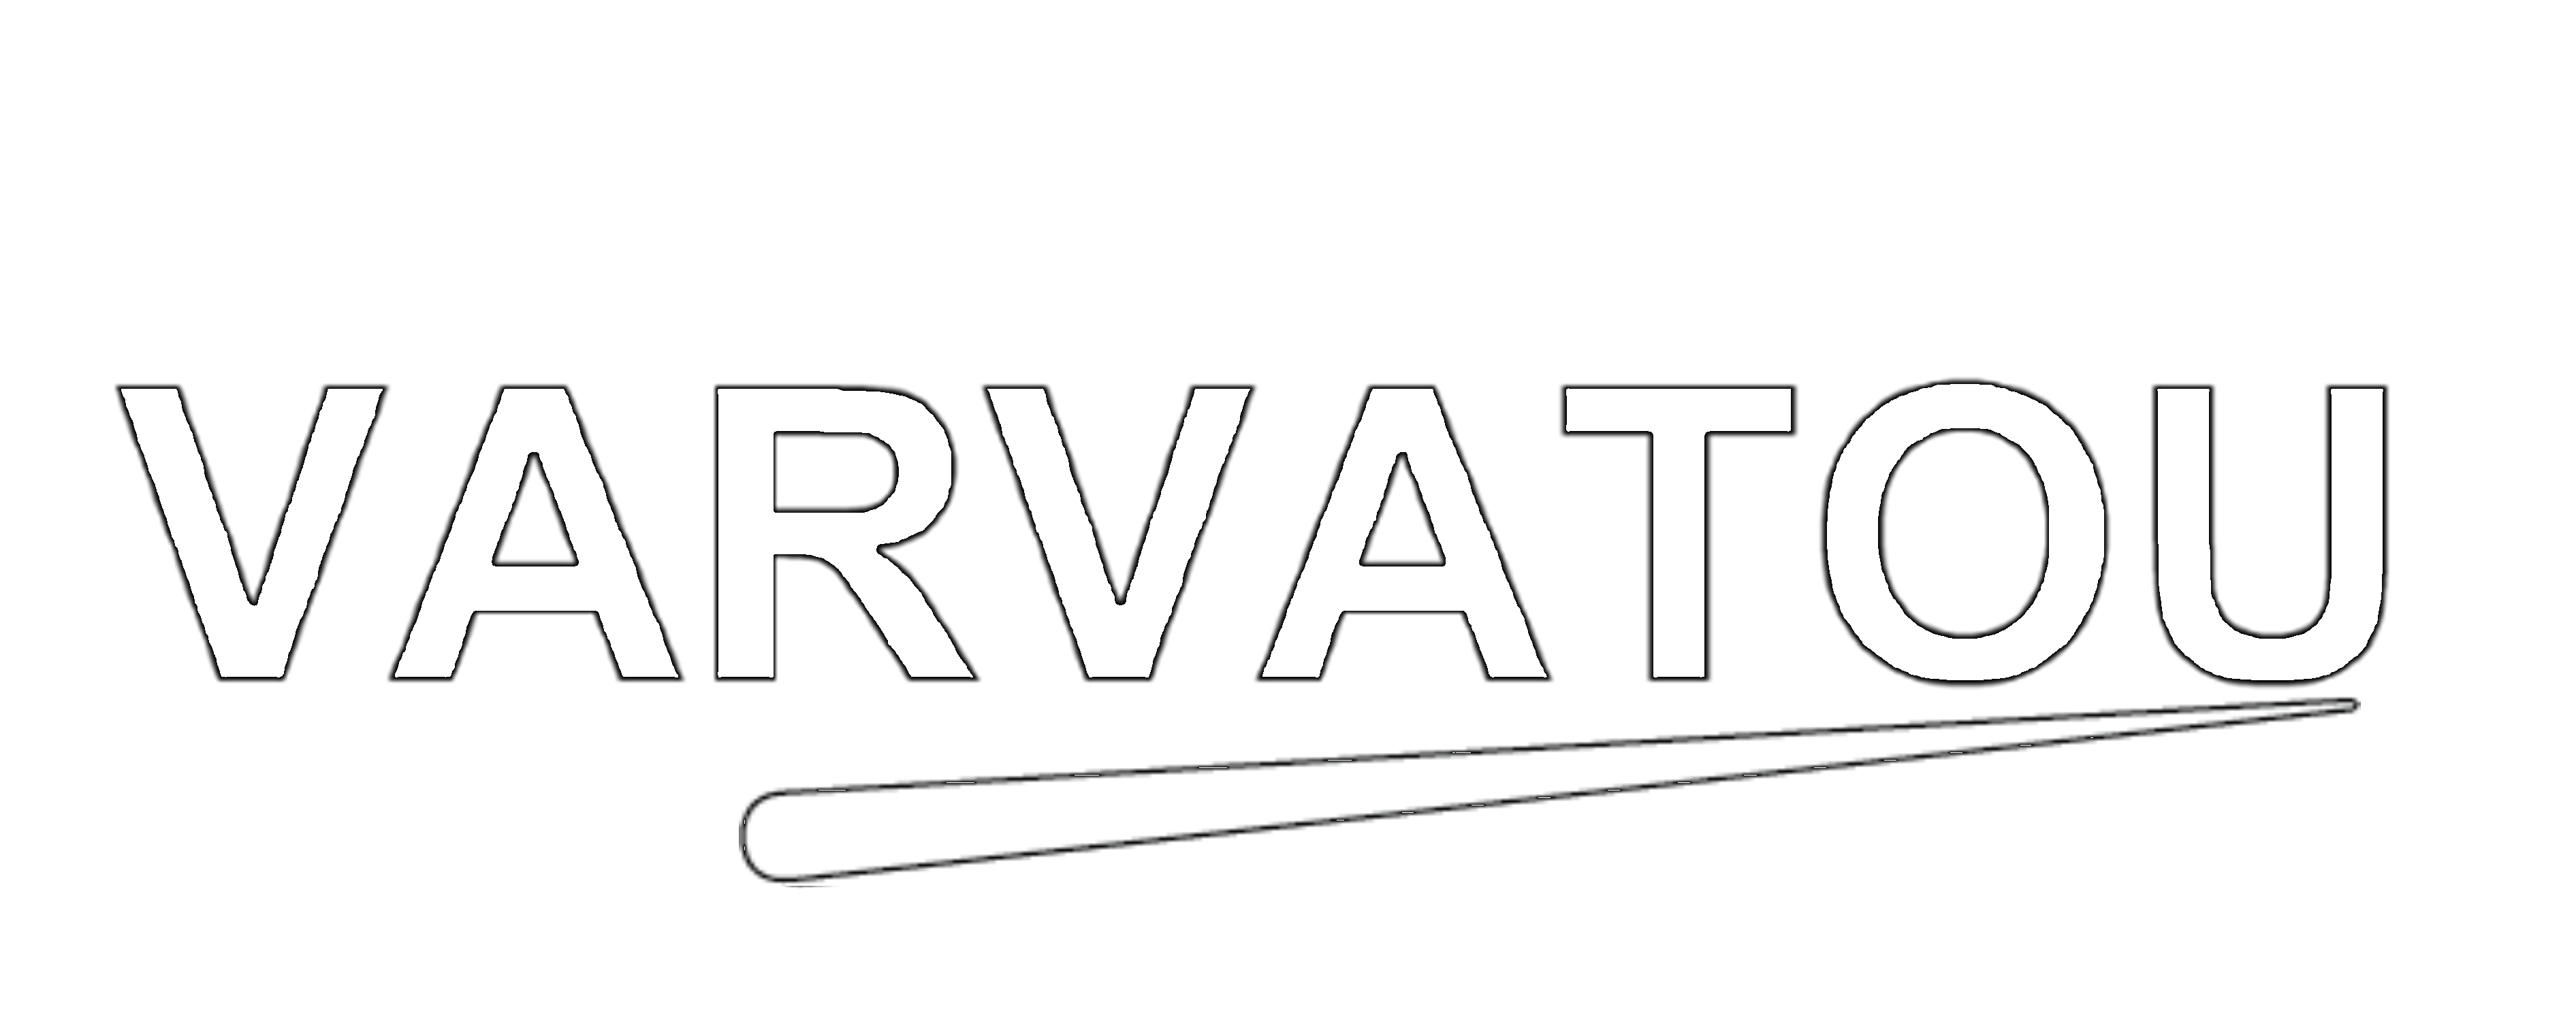 Logo Anwaltskanzlei Varvatou